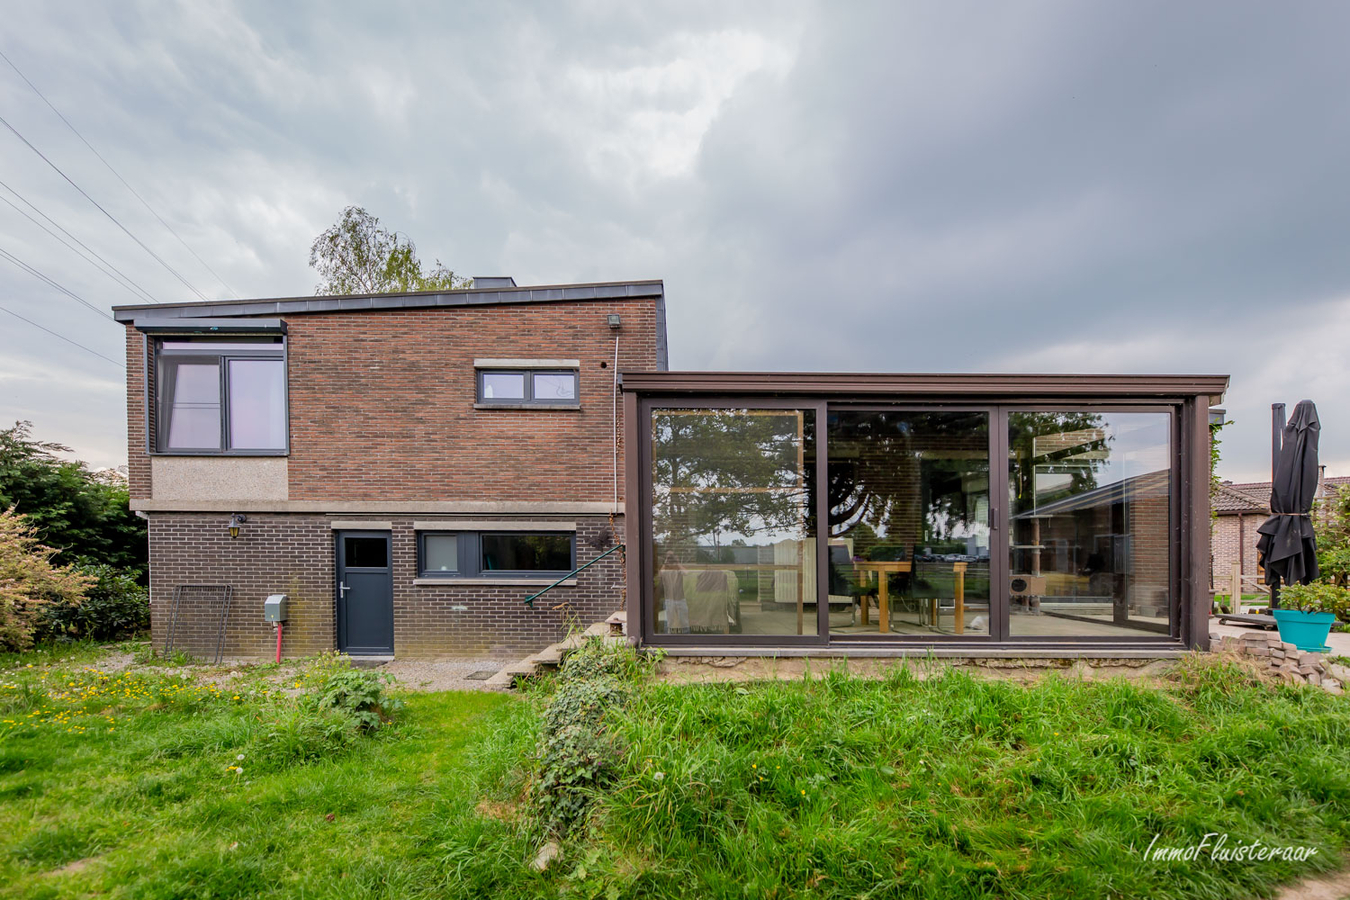 Property sold in Kampenhout